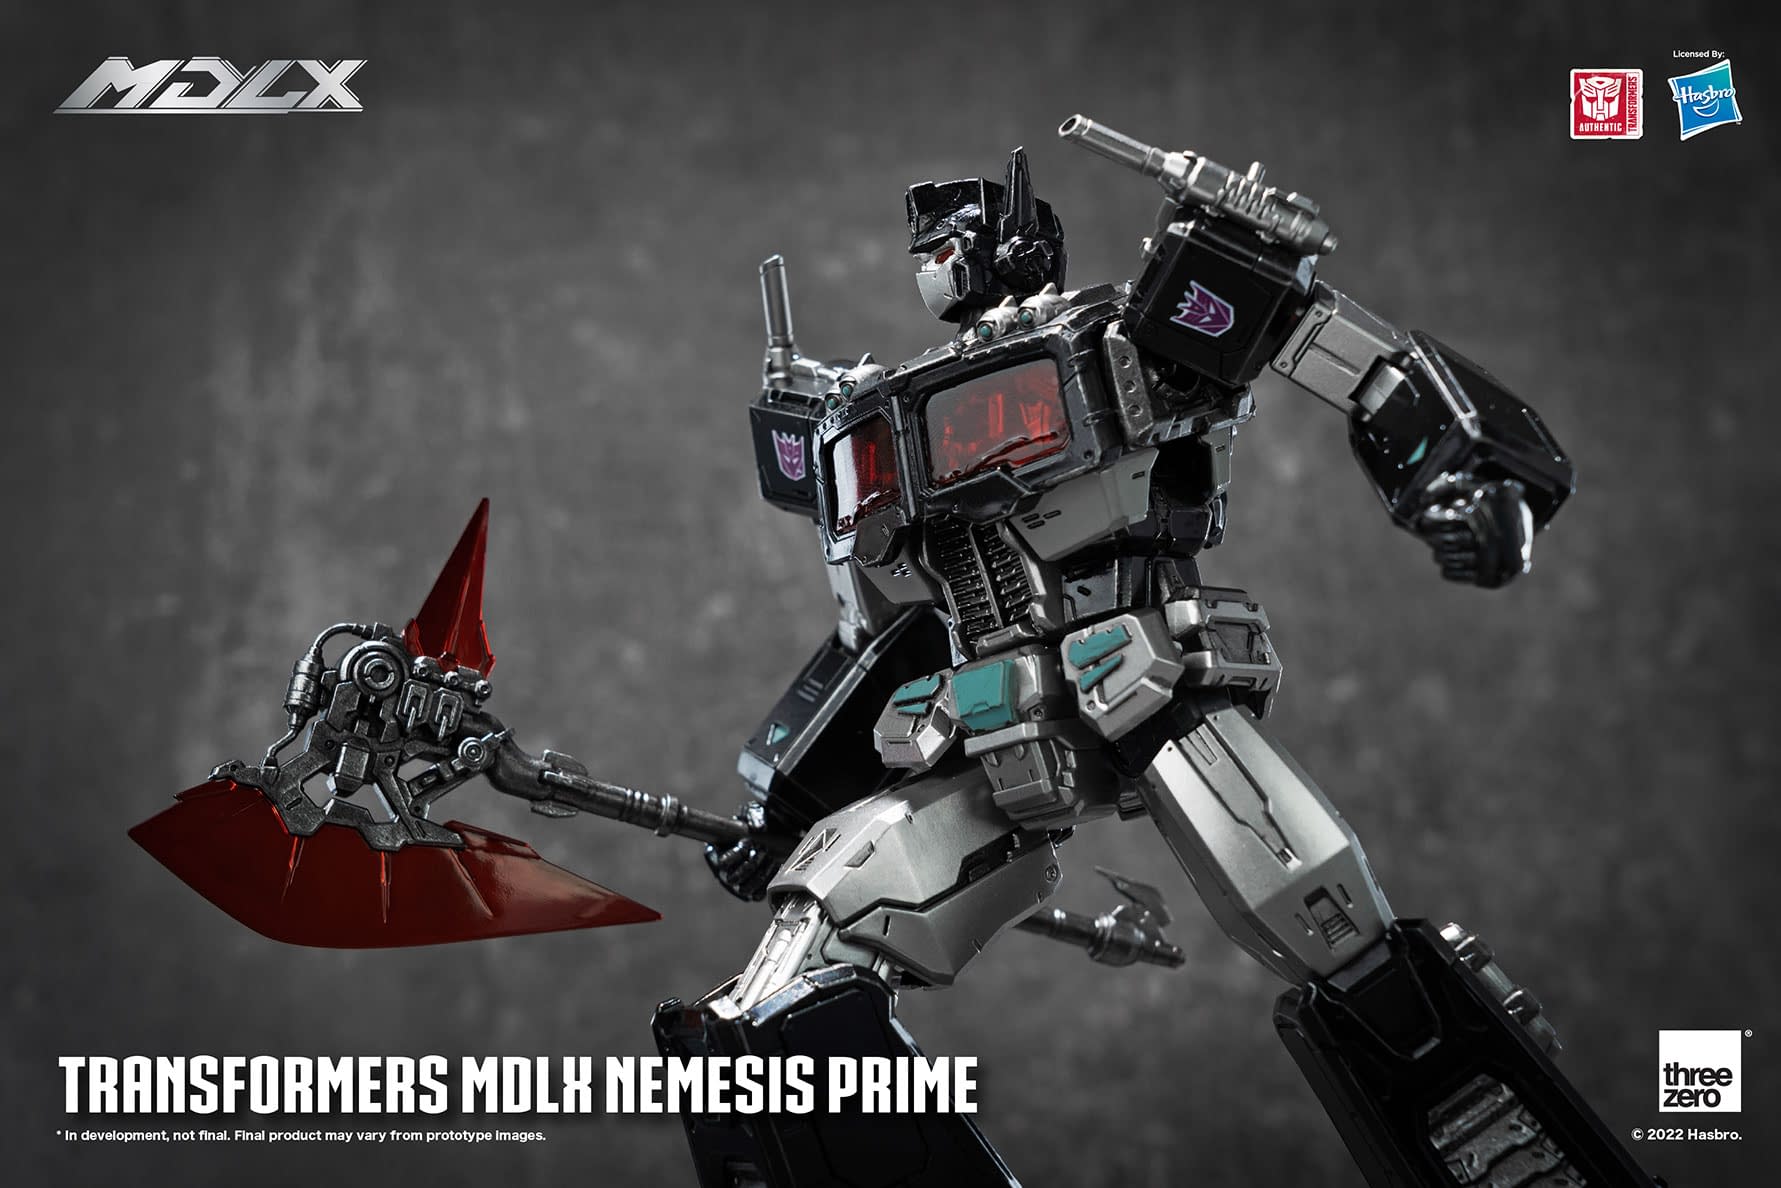 Transfomers Nemesis Prime Comes To threezero's Die-Cast MDLX Line